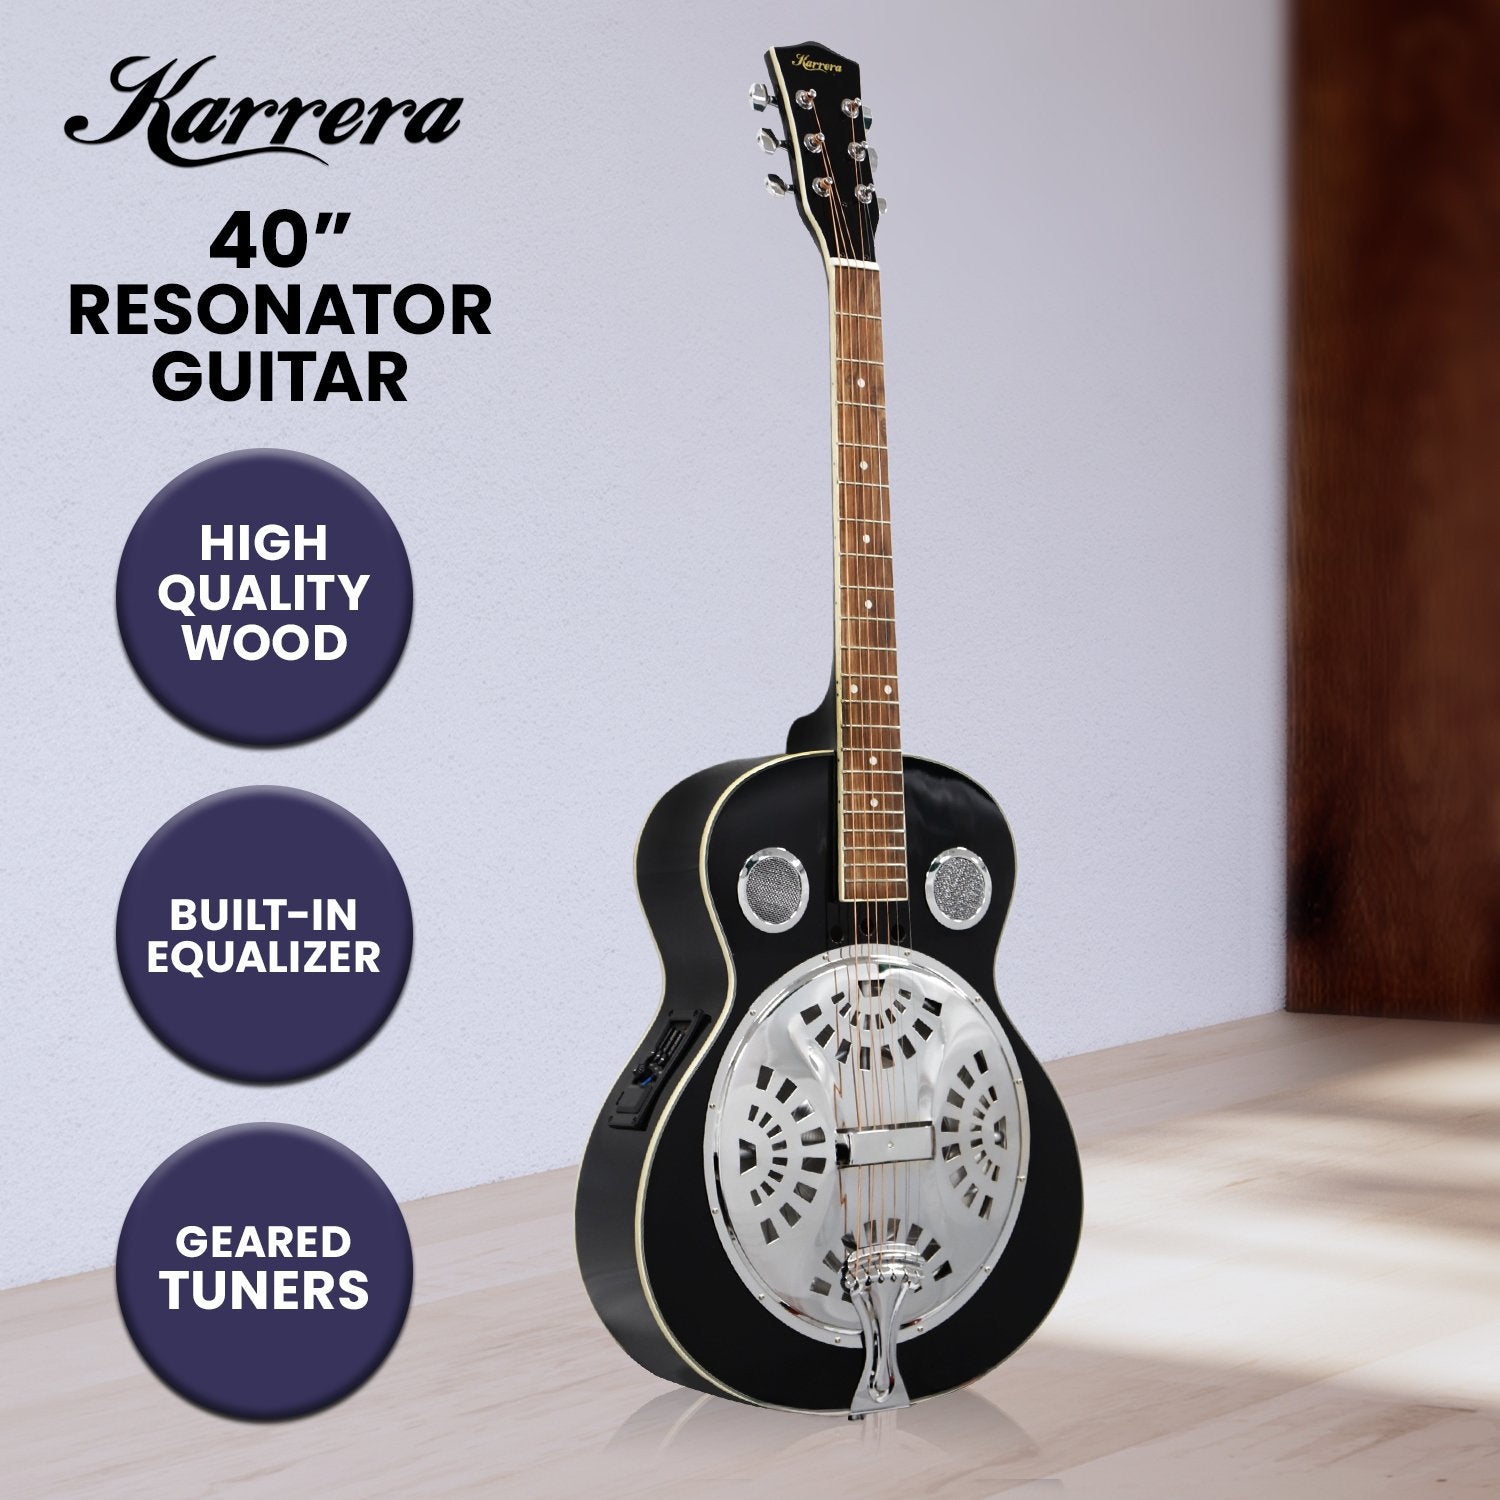 High-Gloss 40" Resonator Guitar with Equalizer - Karrera